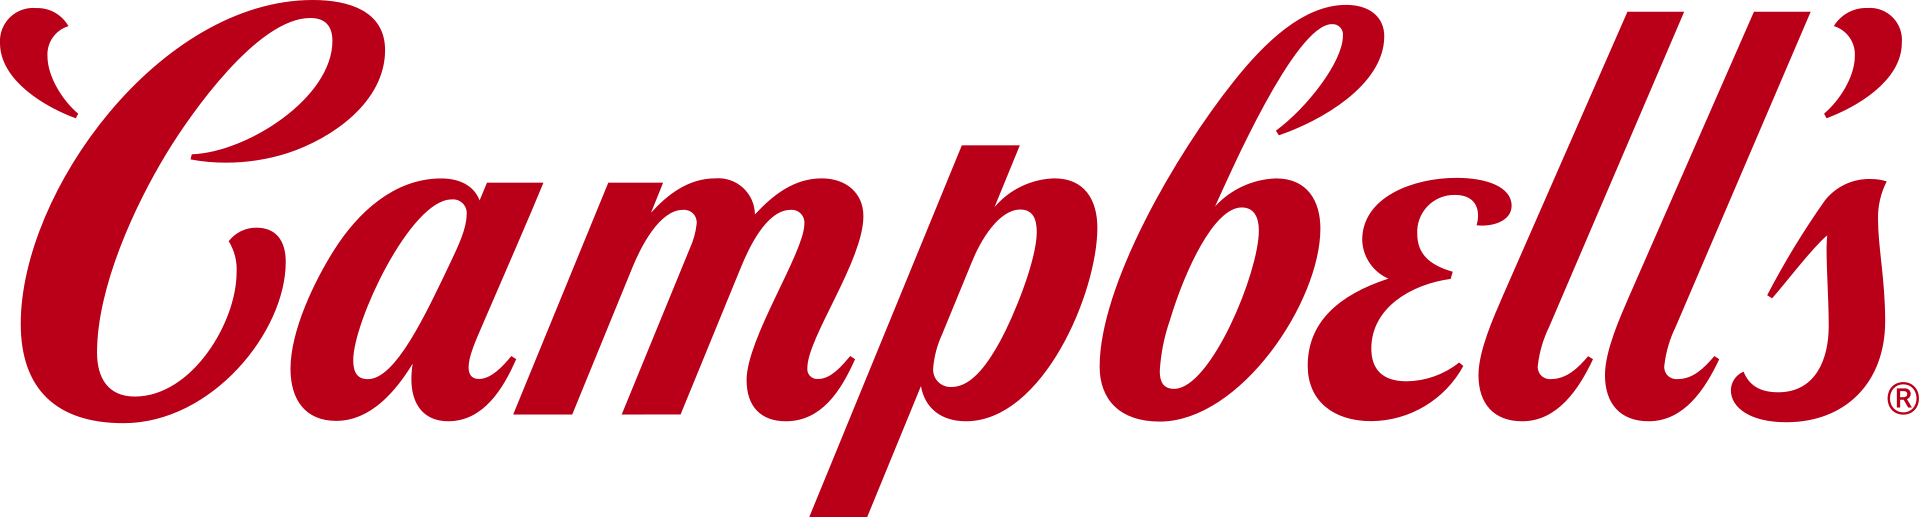 Campbell's Brand Logo